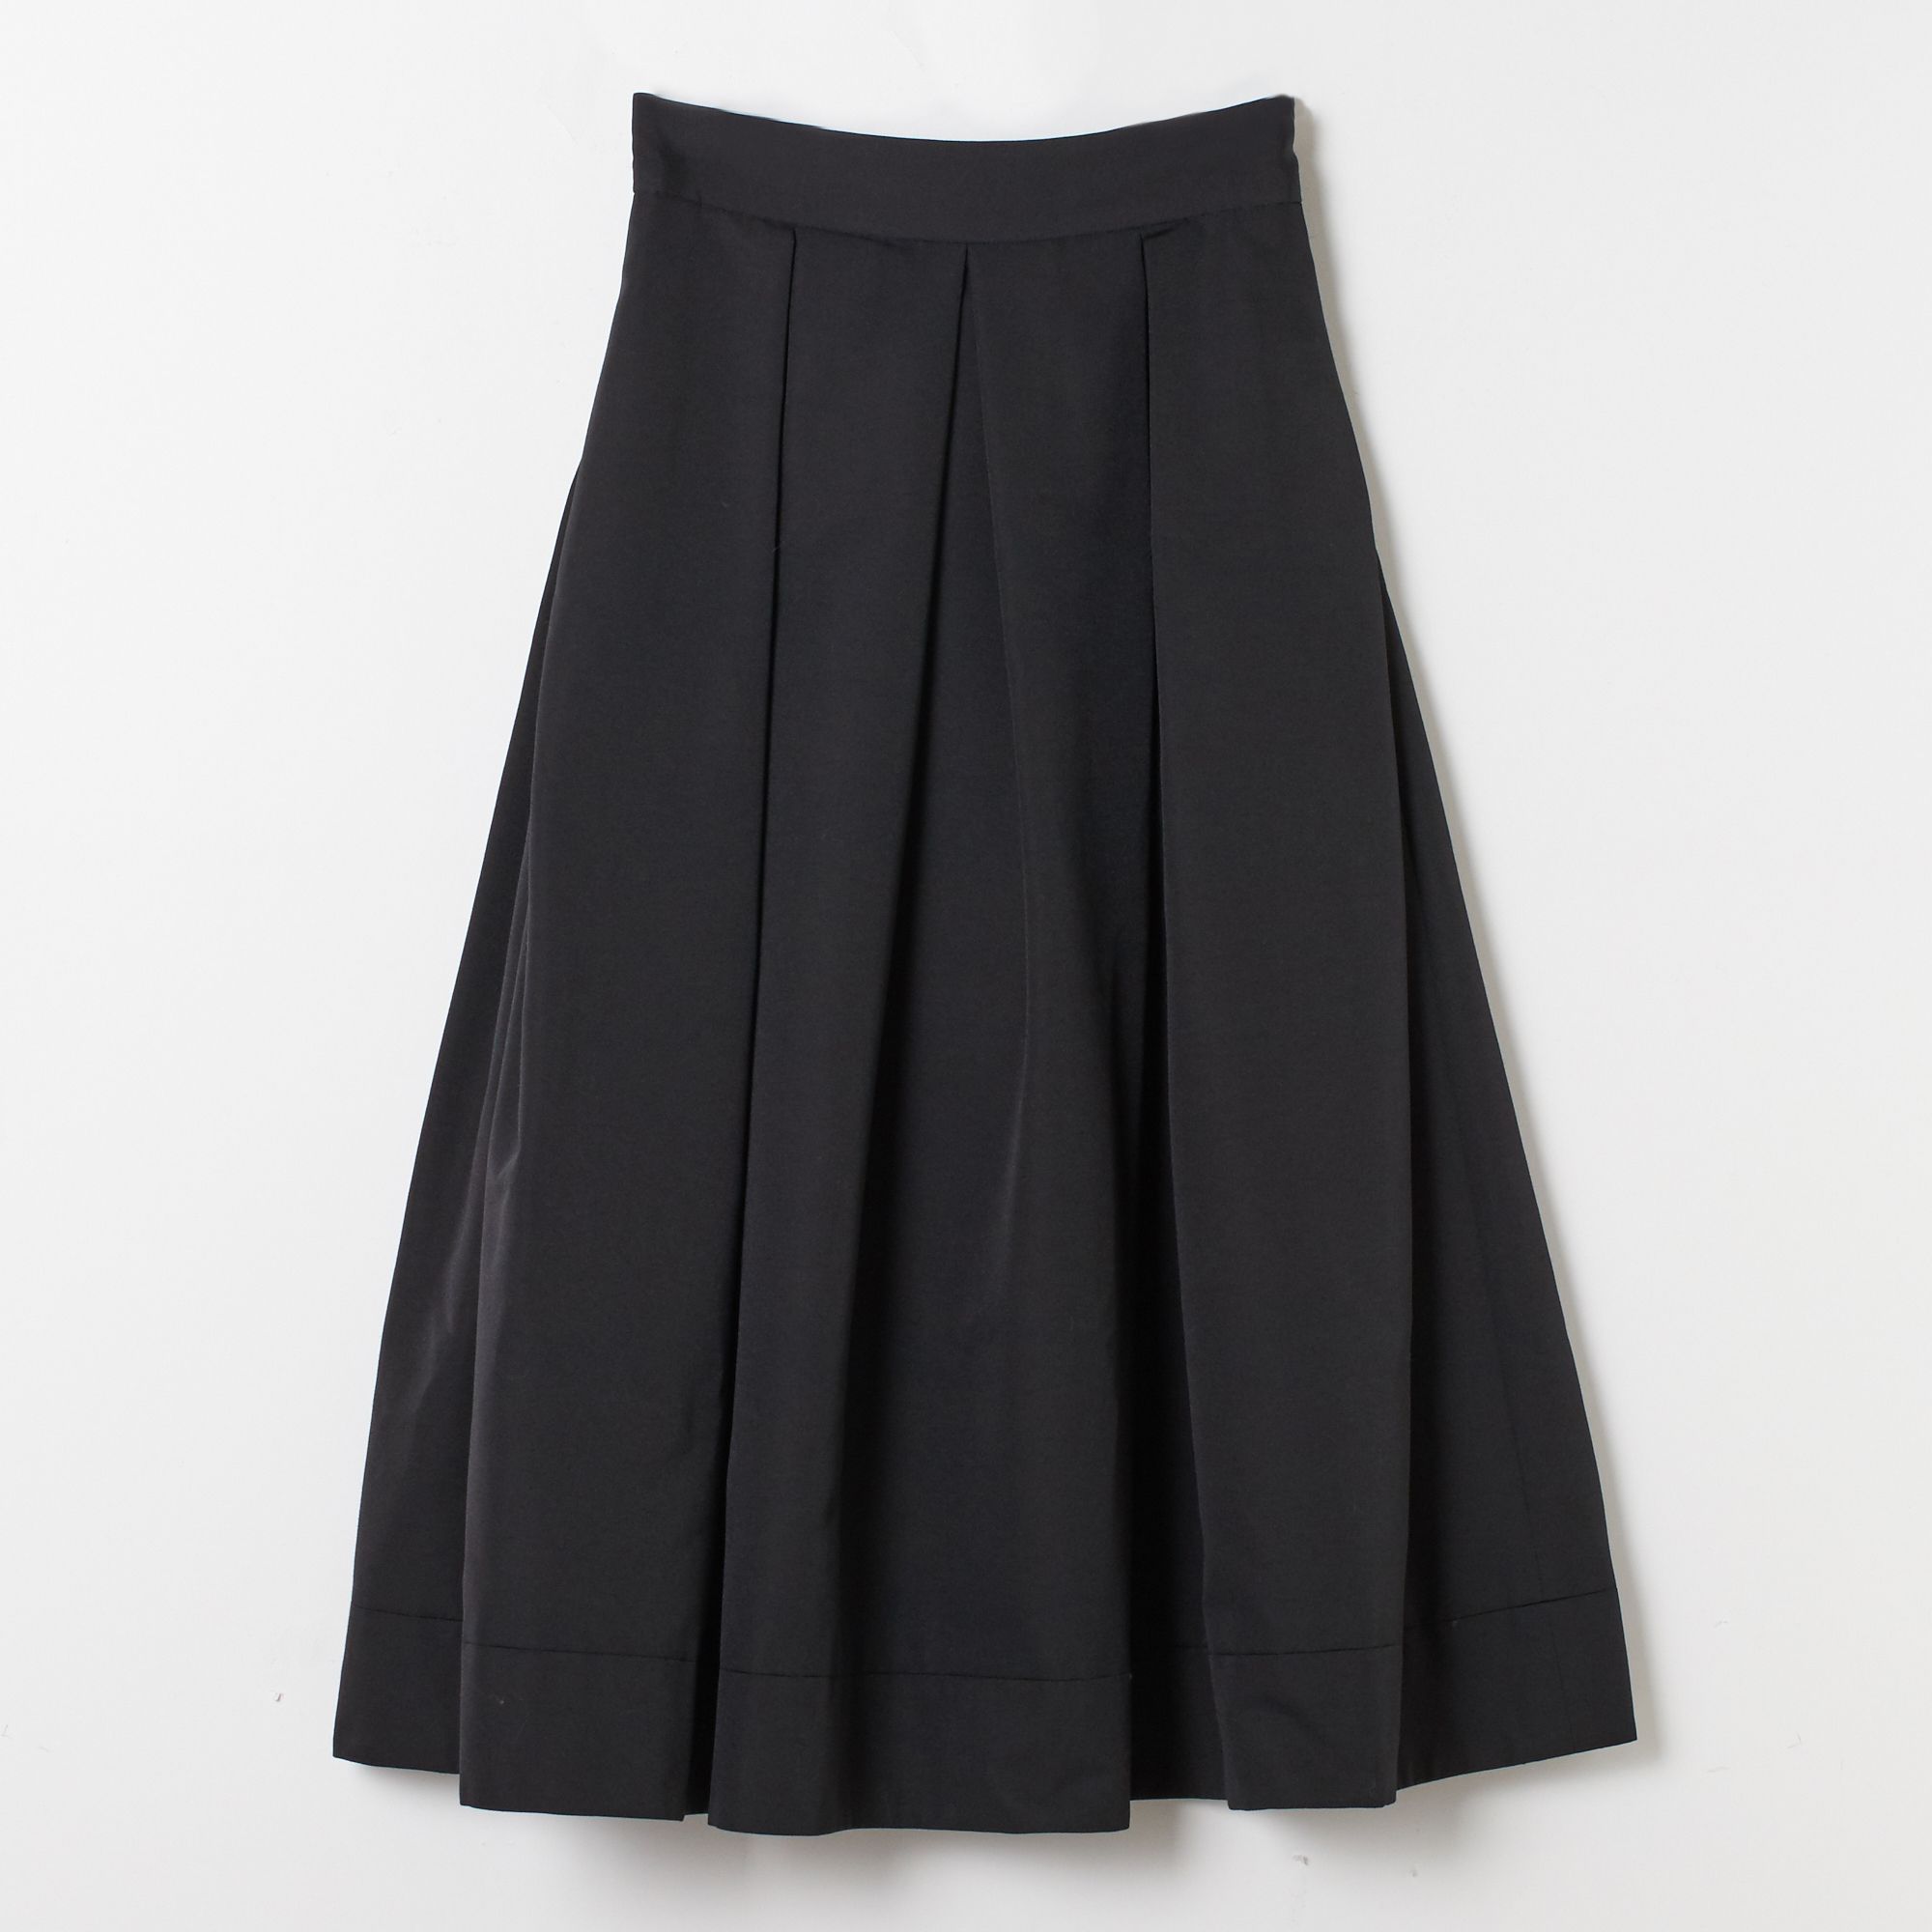  Pale Jute(ペール ジュート)/Basic skirt